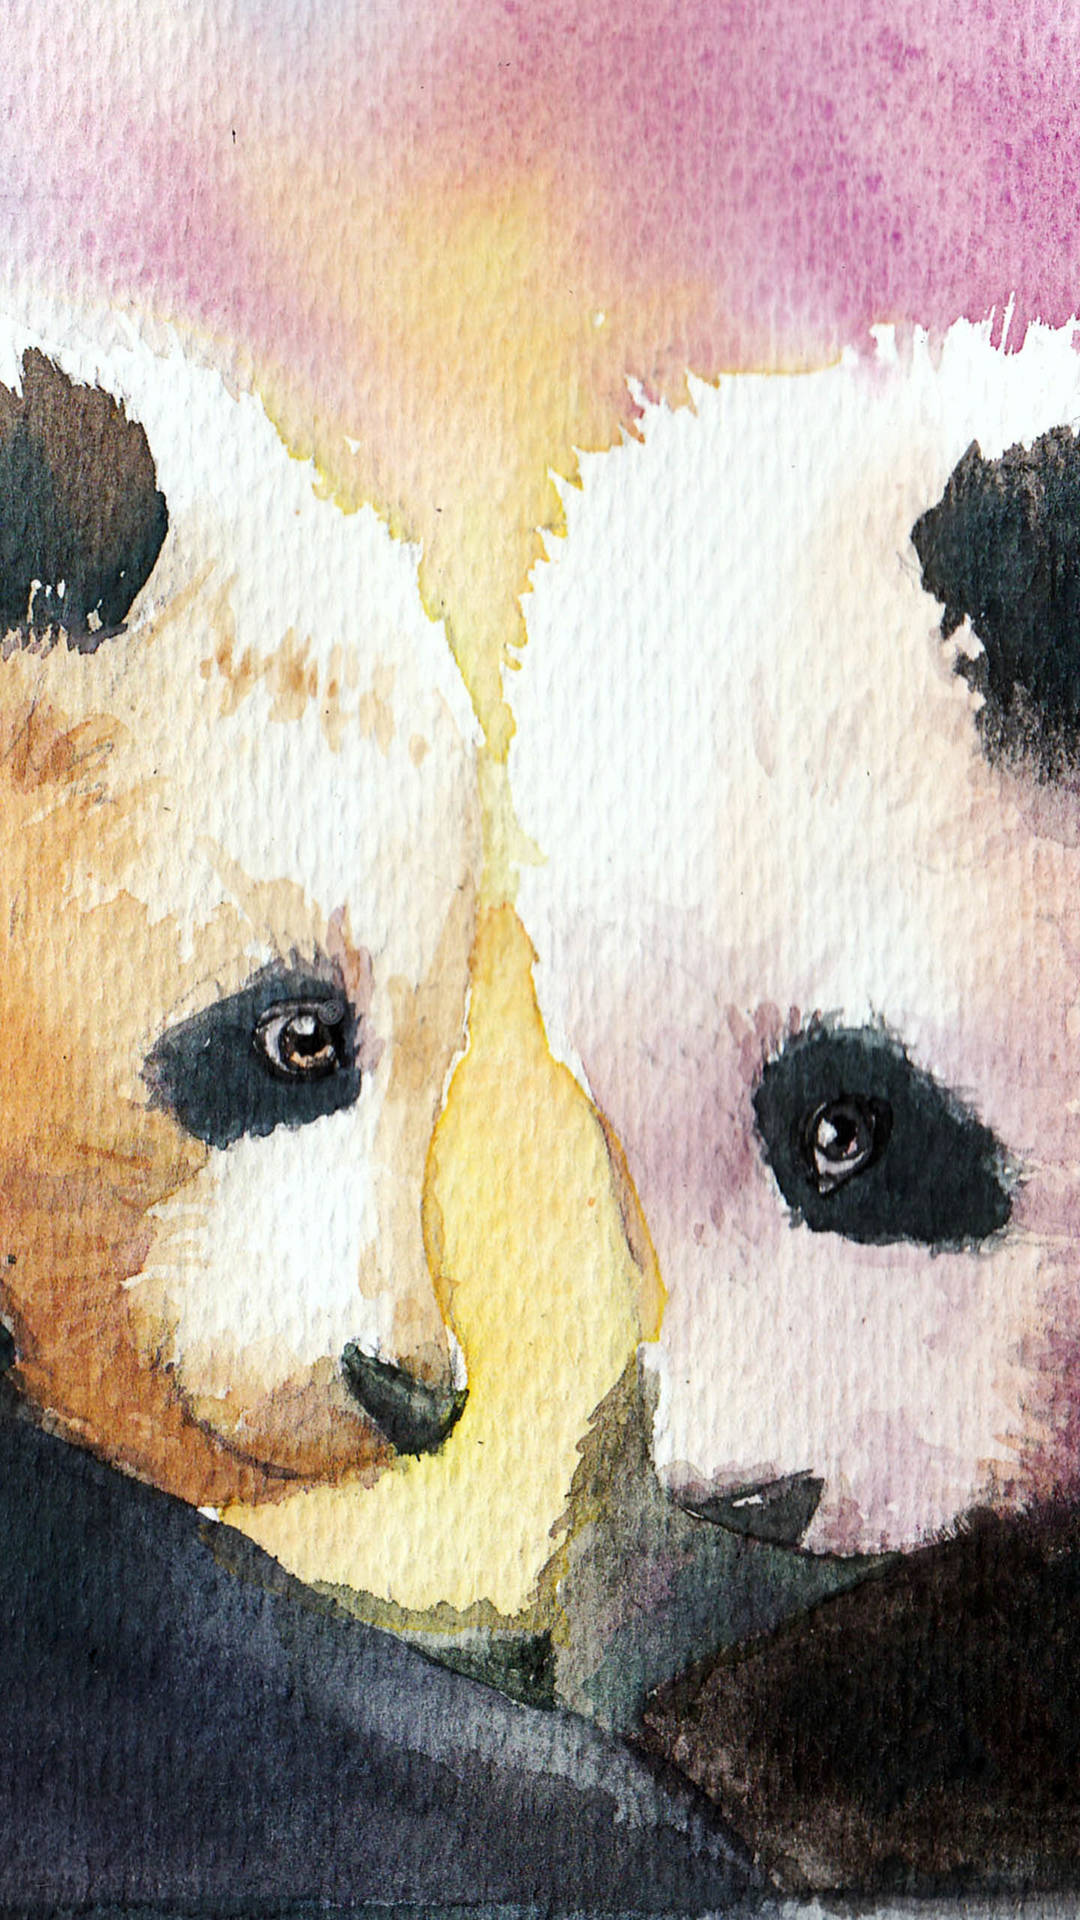 fond d'écran panda,panda,ours,peinture aquarelle,art,la peinture